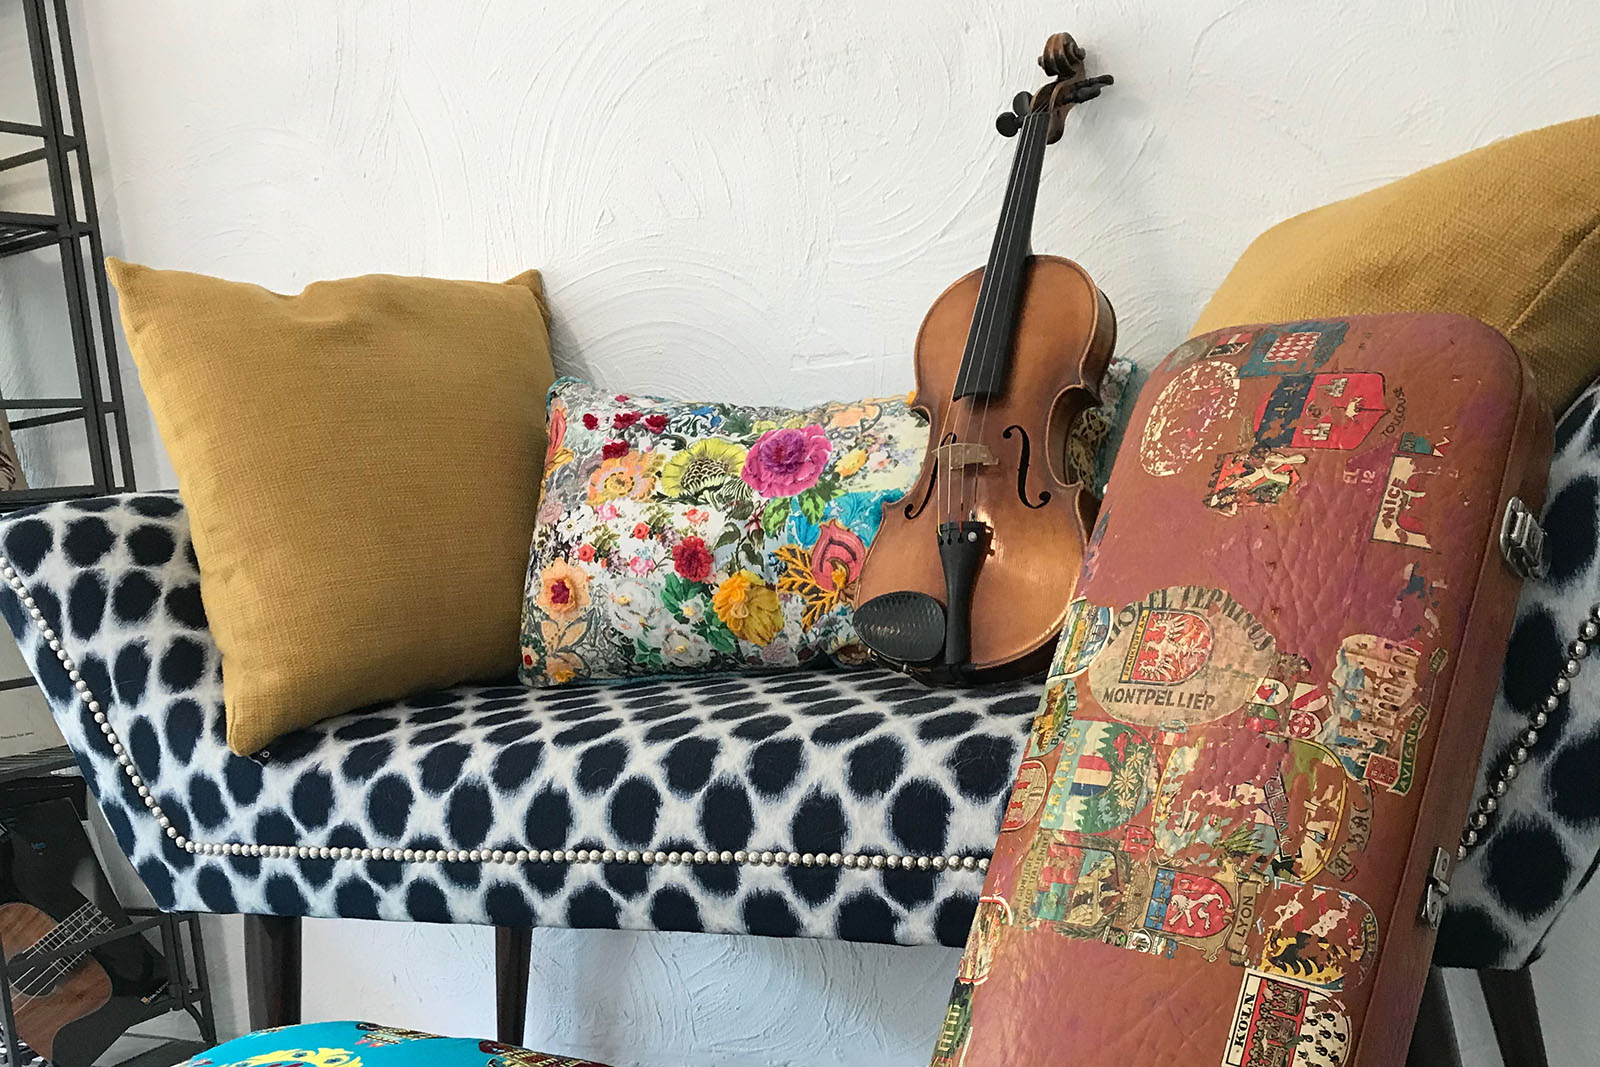 Old Violin and Case in Studio